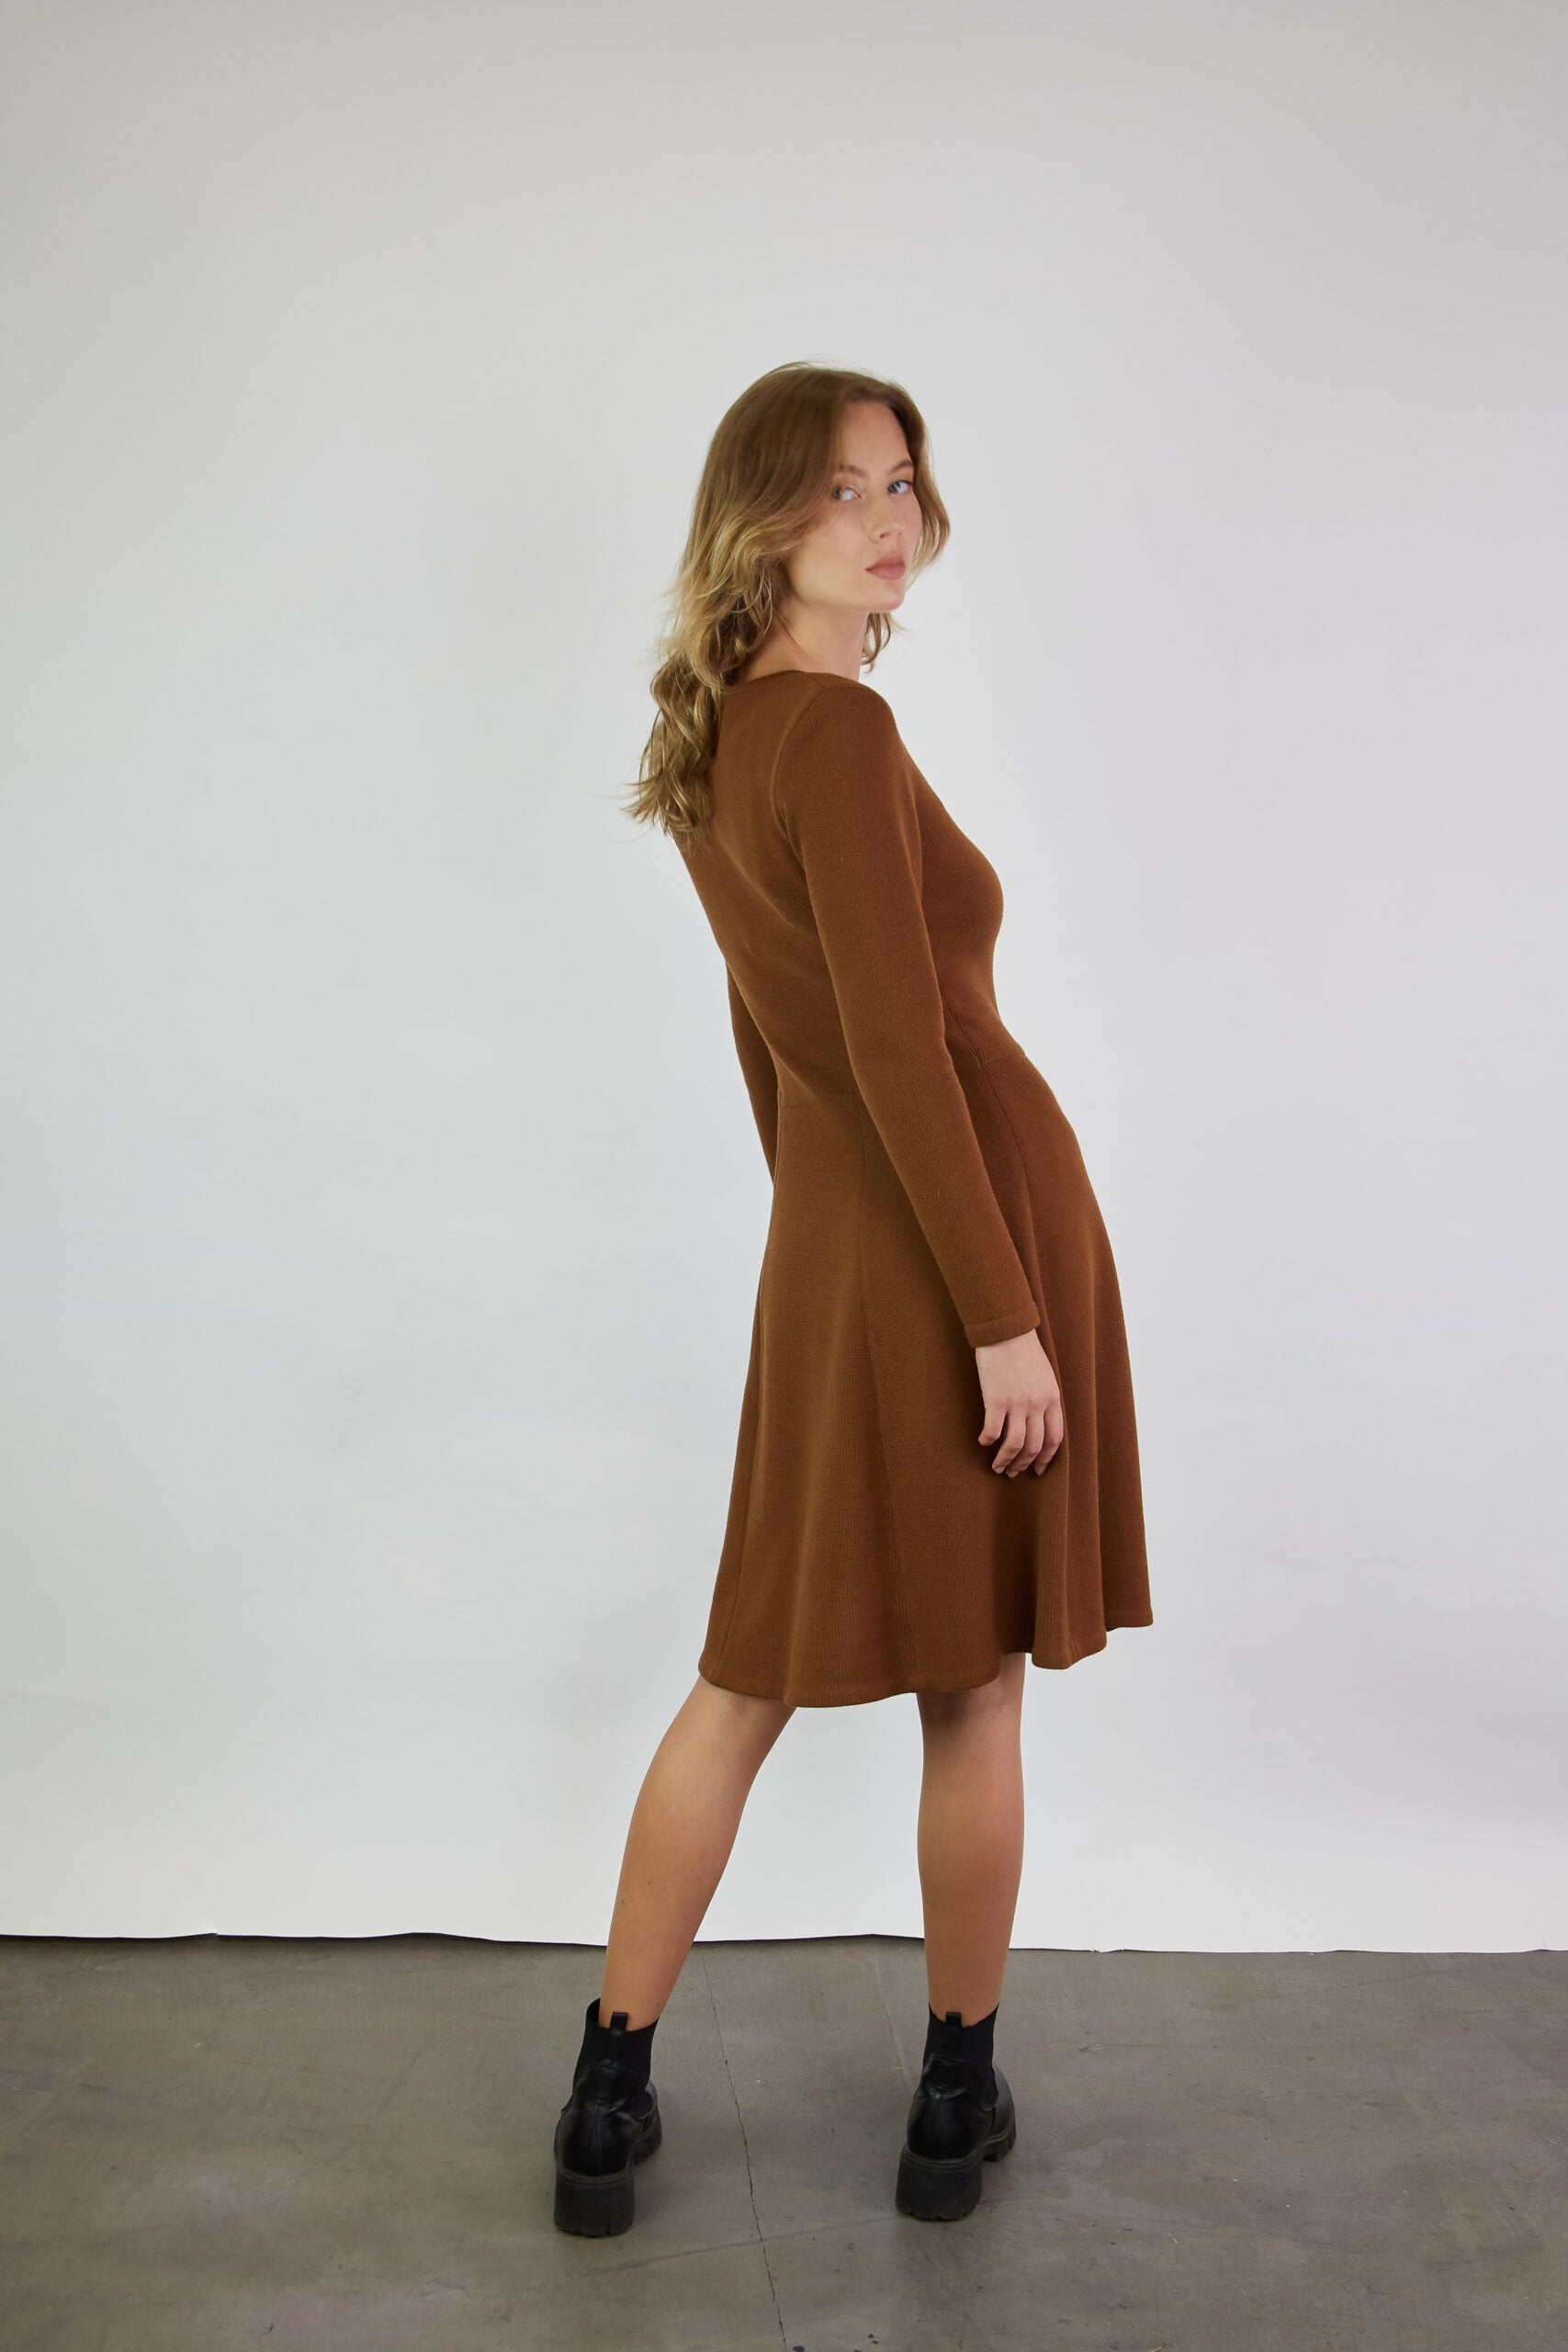 Knee-length merino wool dress with a half-circle skirt.